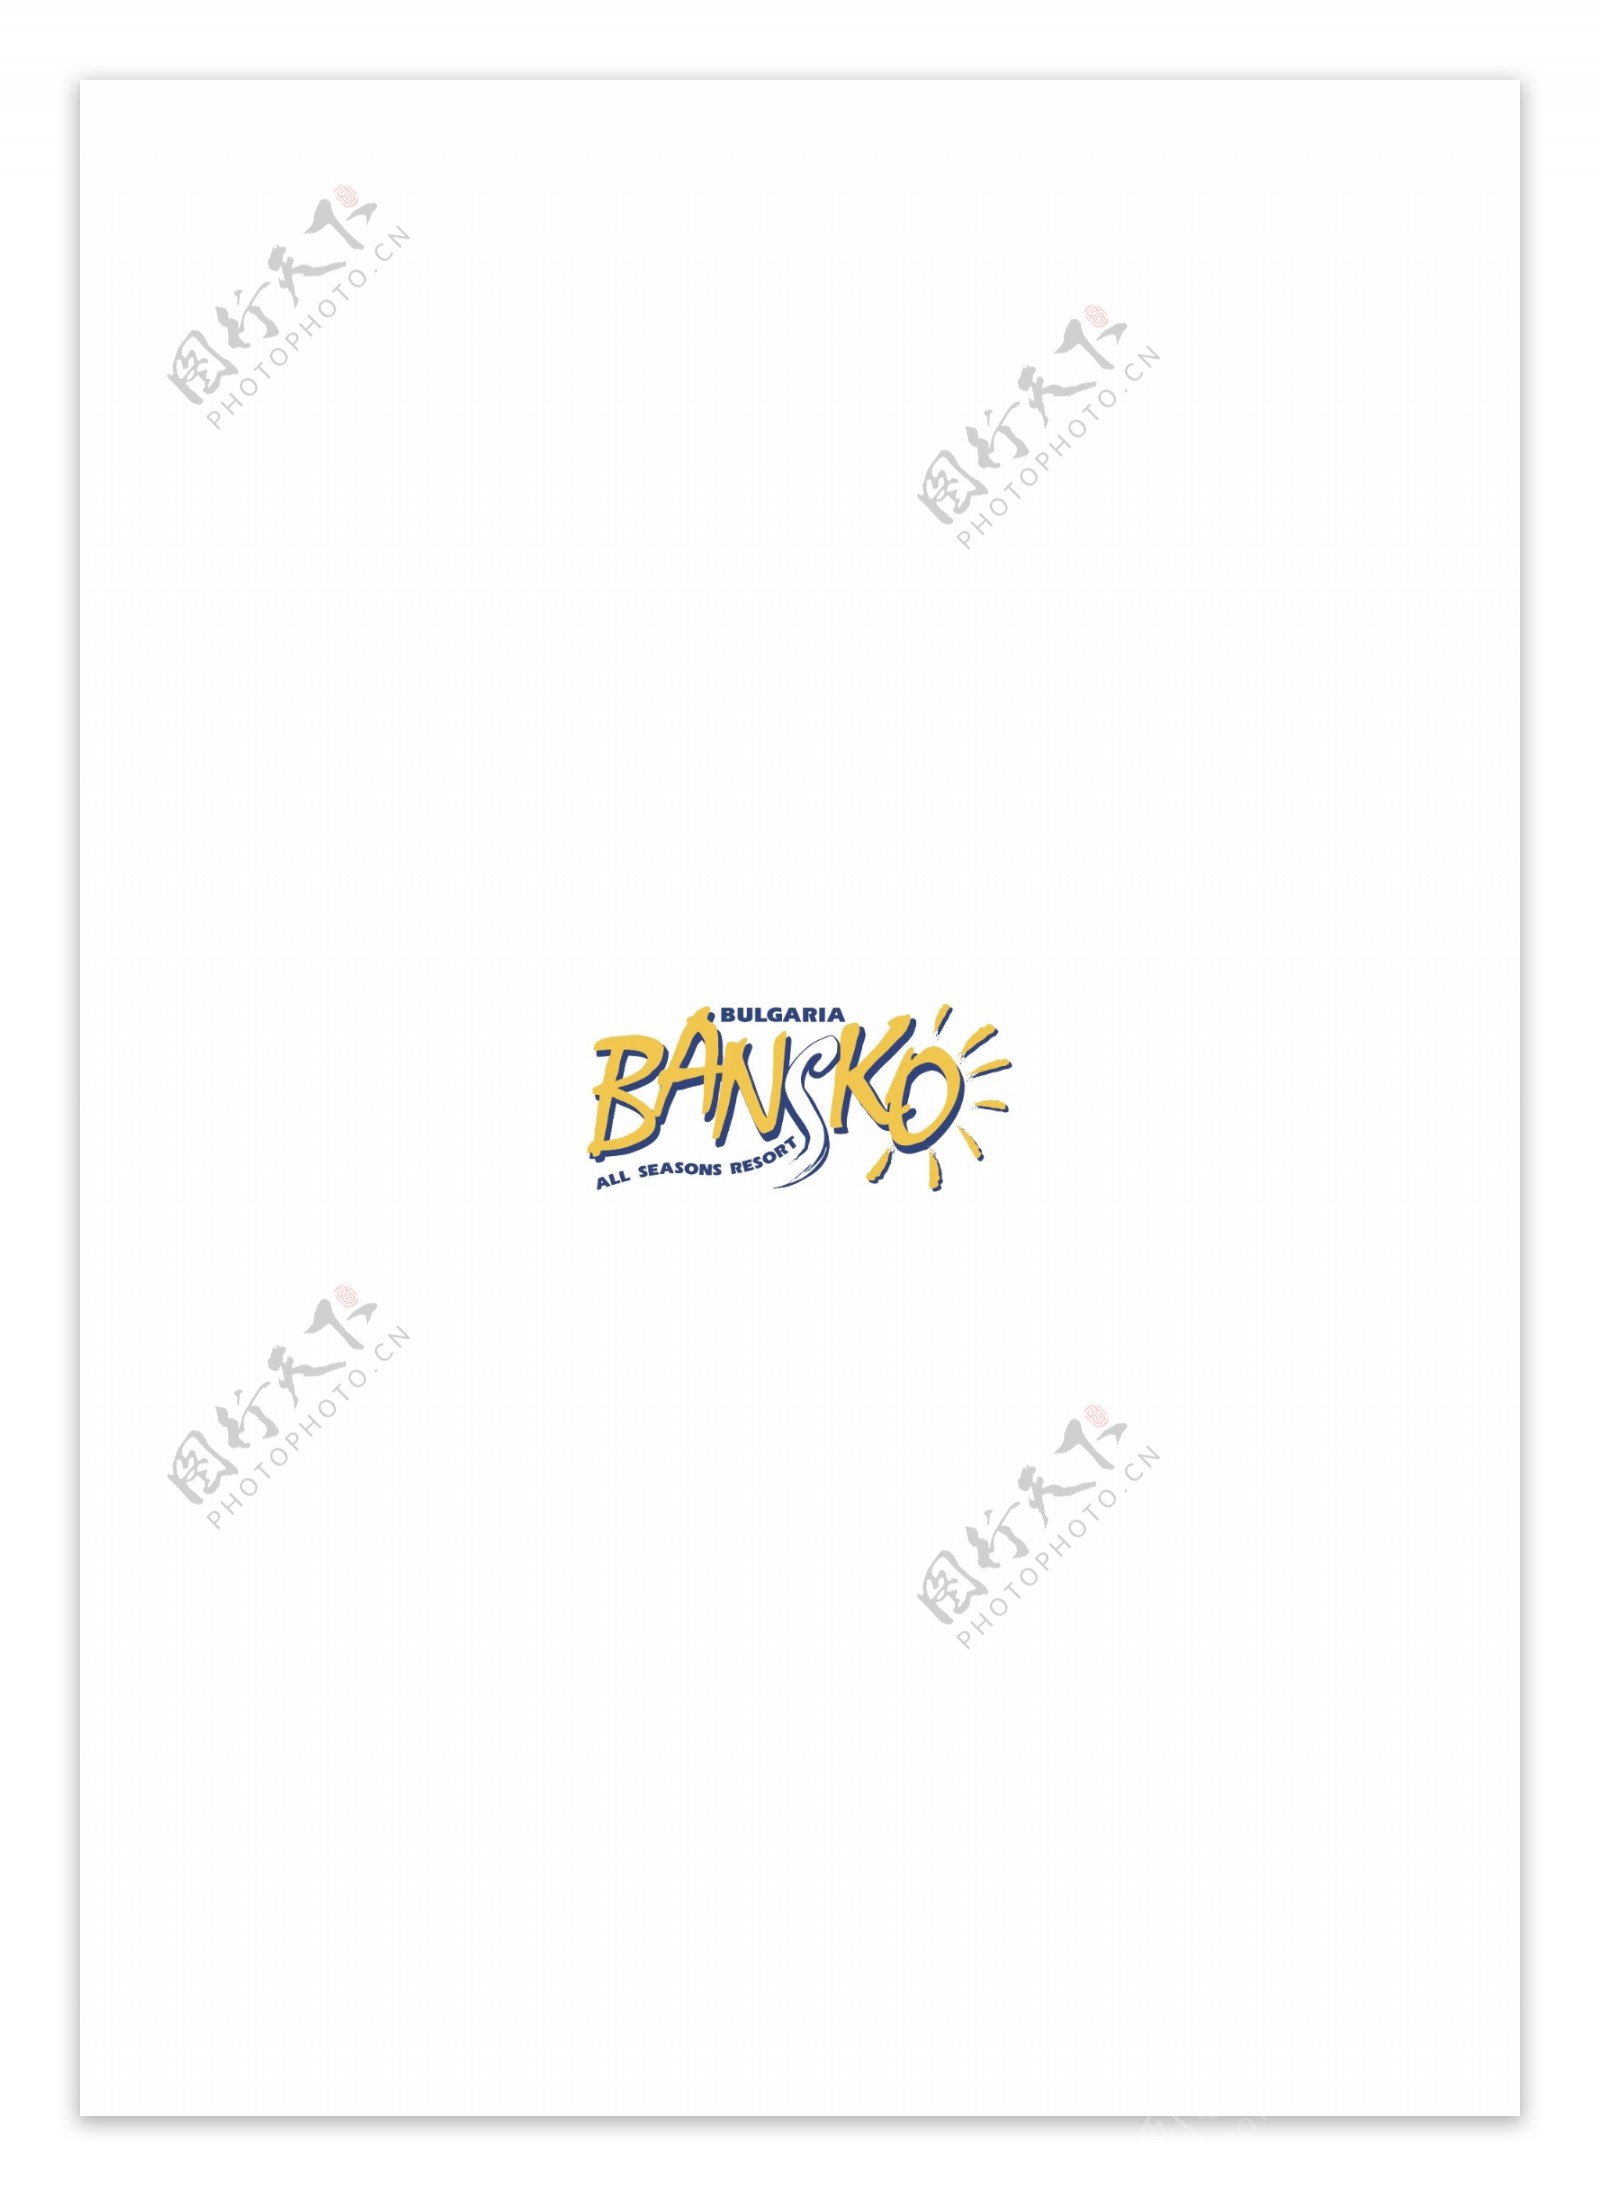 Banskologo设计欣赏Bansko旅行社标志下载标志设计欣赏